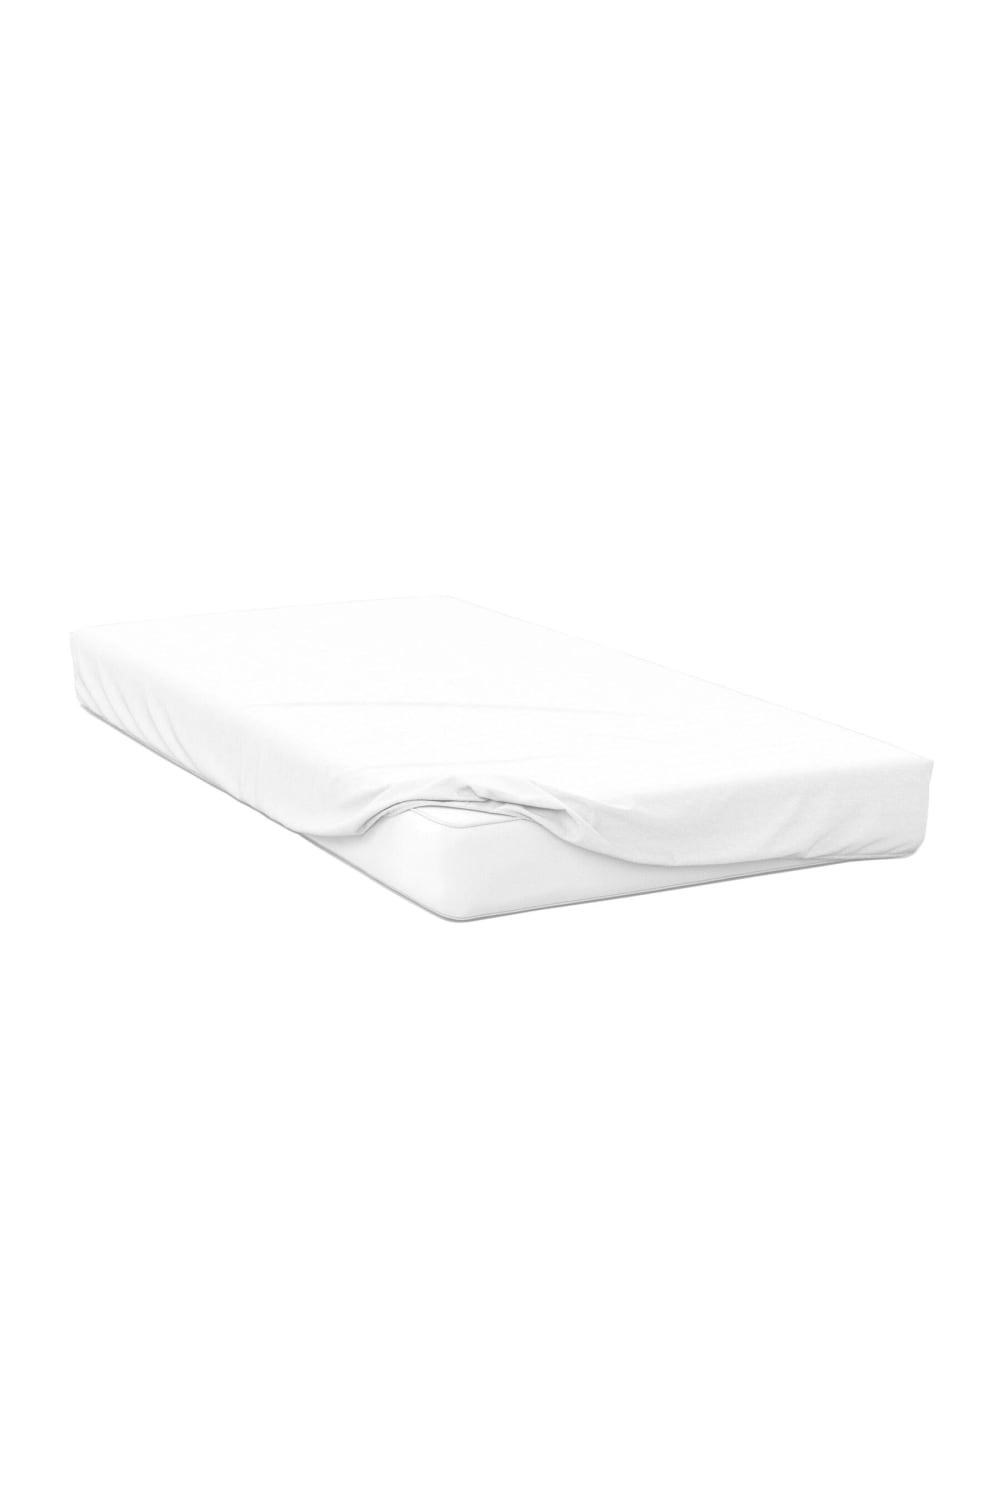 Belledorm Jersey Cotton Deep Fitted Sheet (White) (Crib)